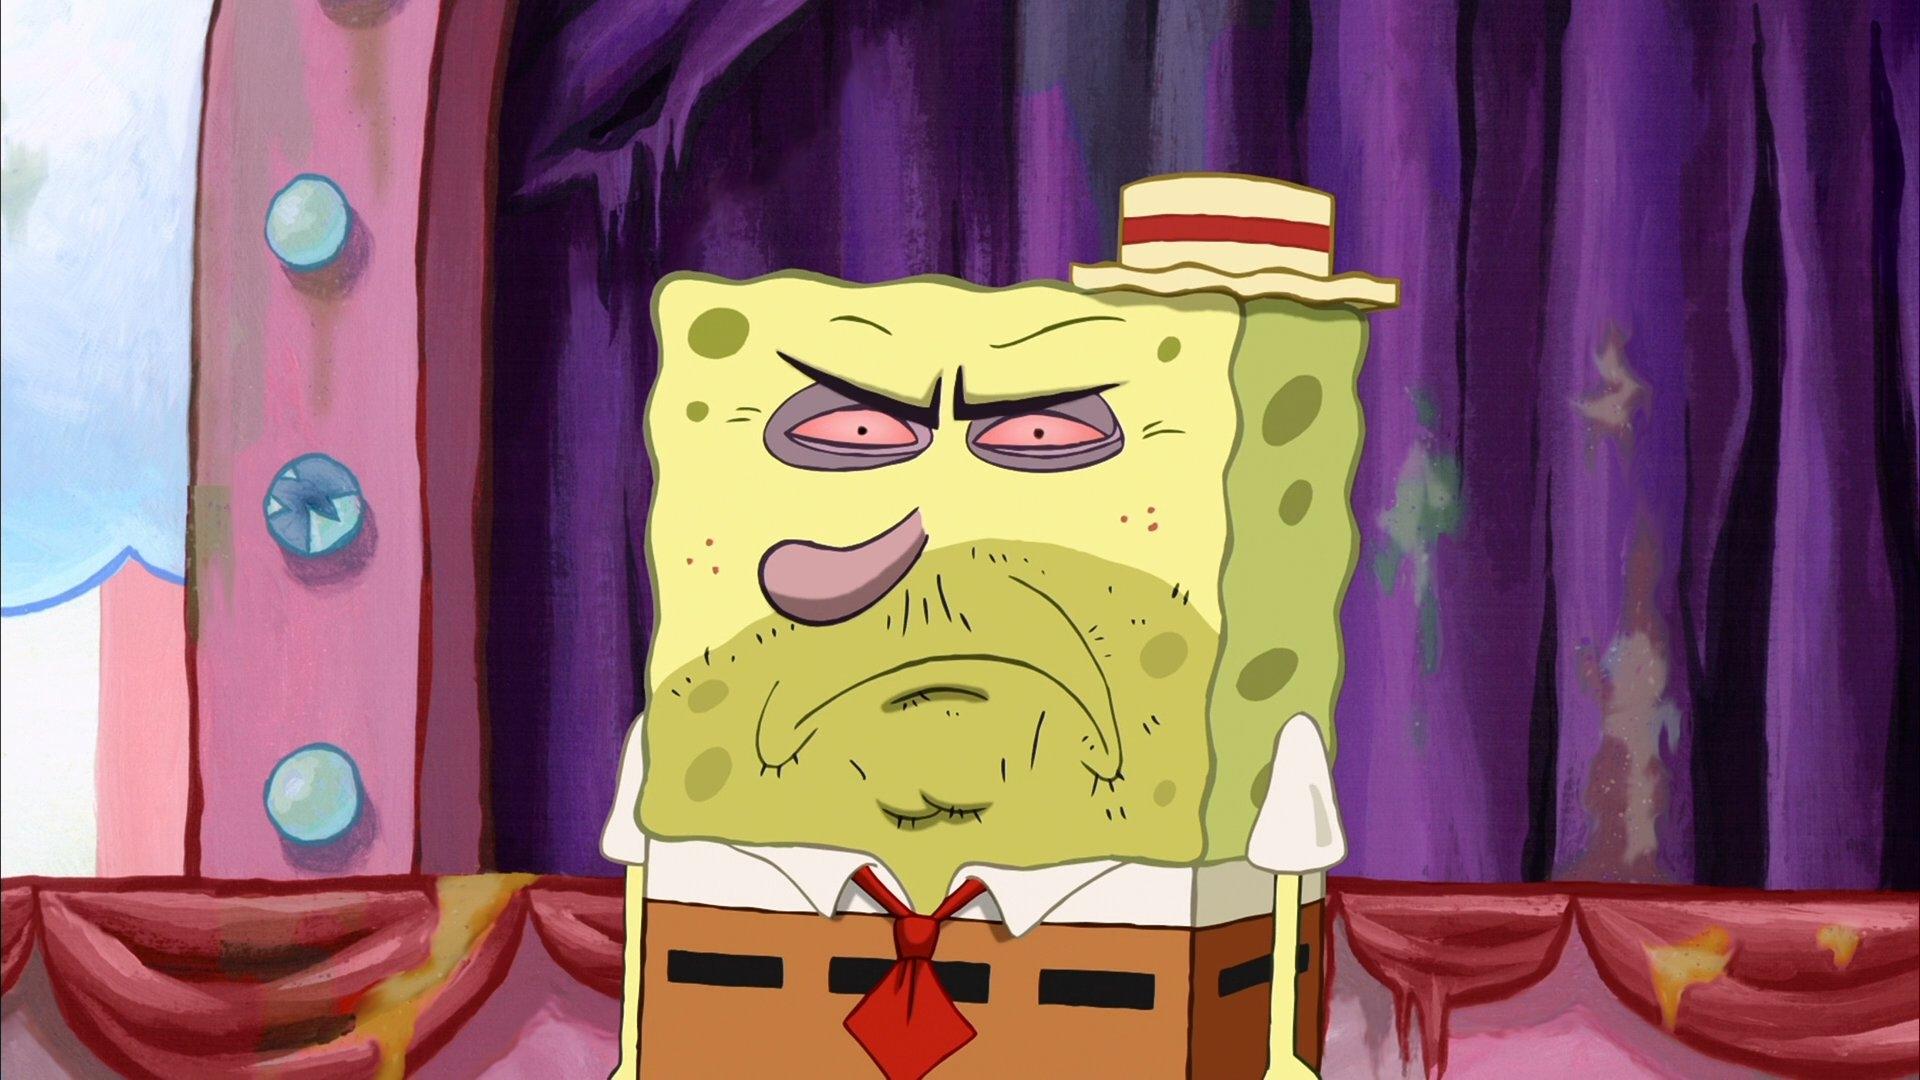 Spongebob sad face.